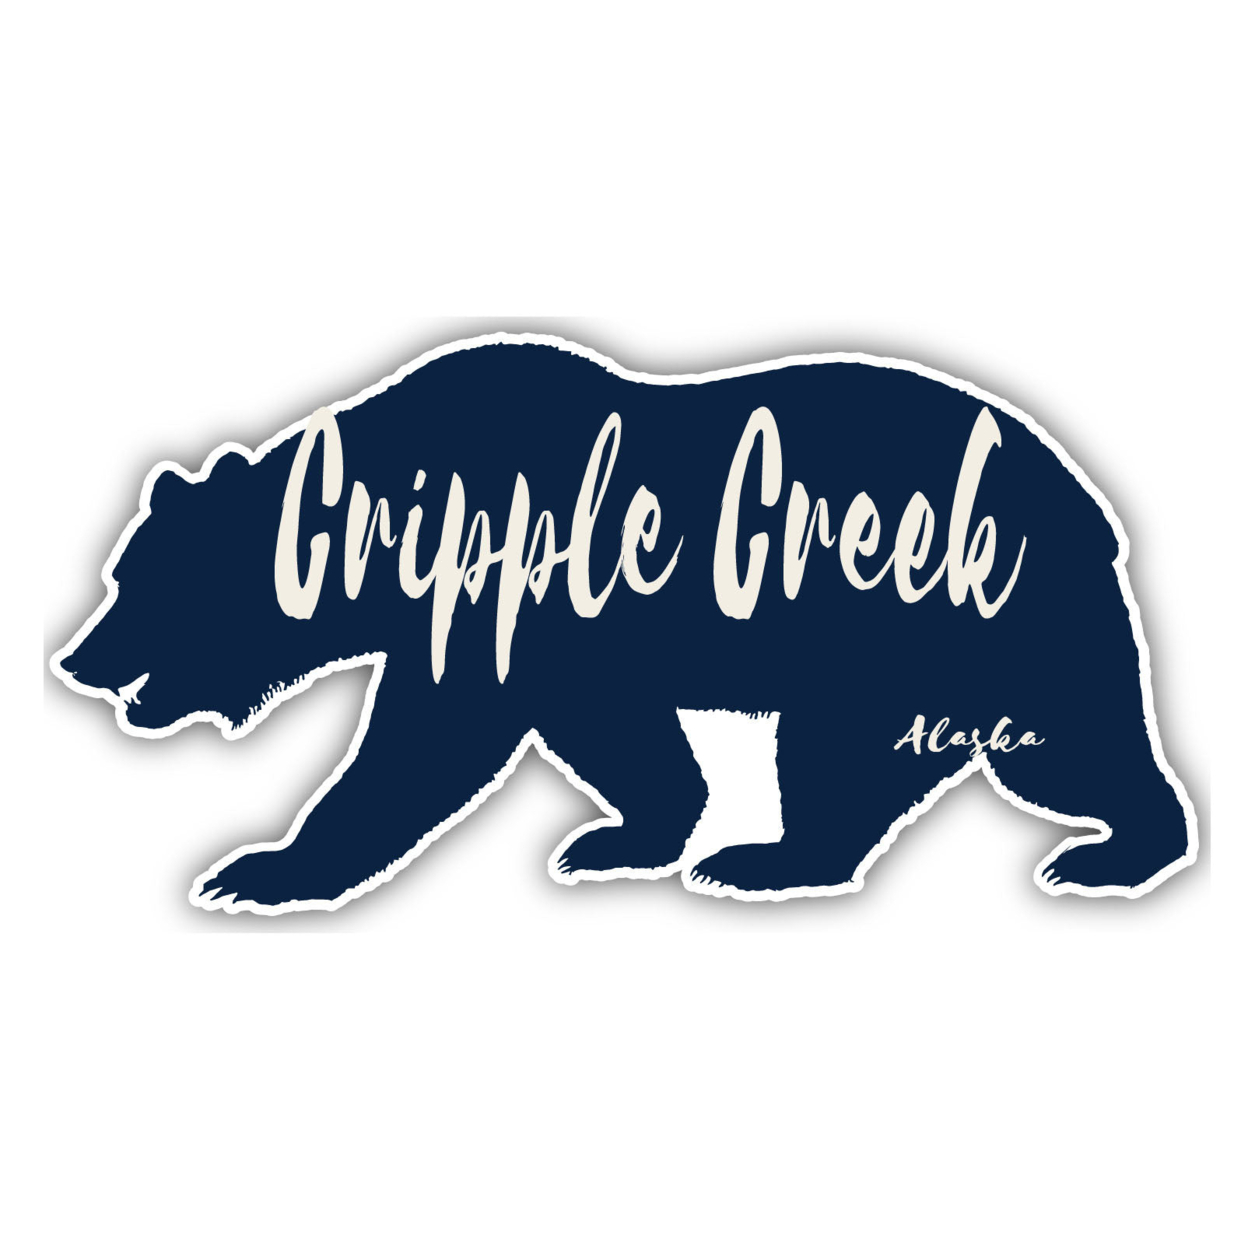 Cripple Creek Alaska Souvenir Decorative Stickers (Choose Theme And Size) - Single Unit, 6-Inch, Bear